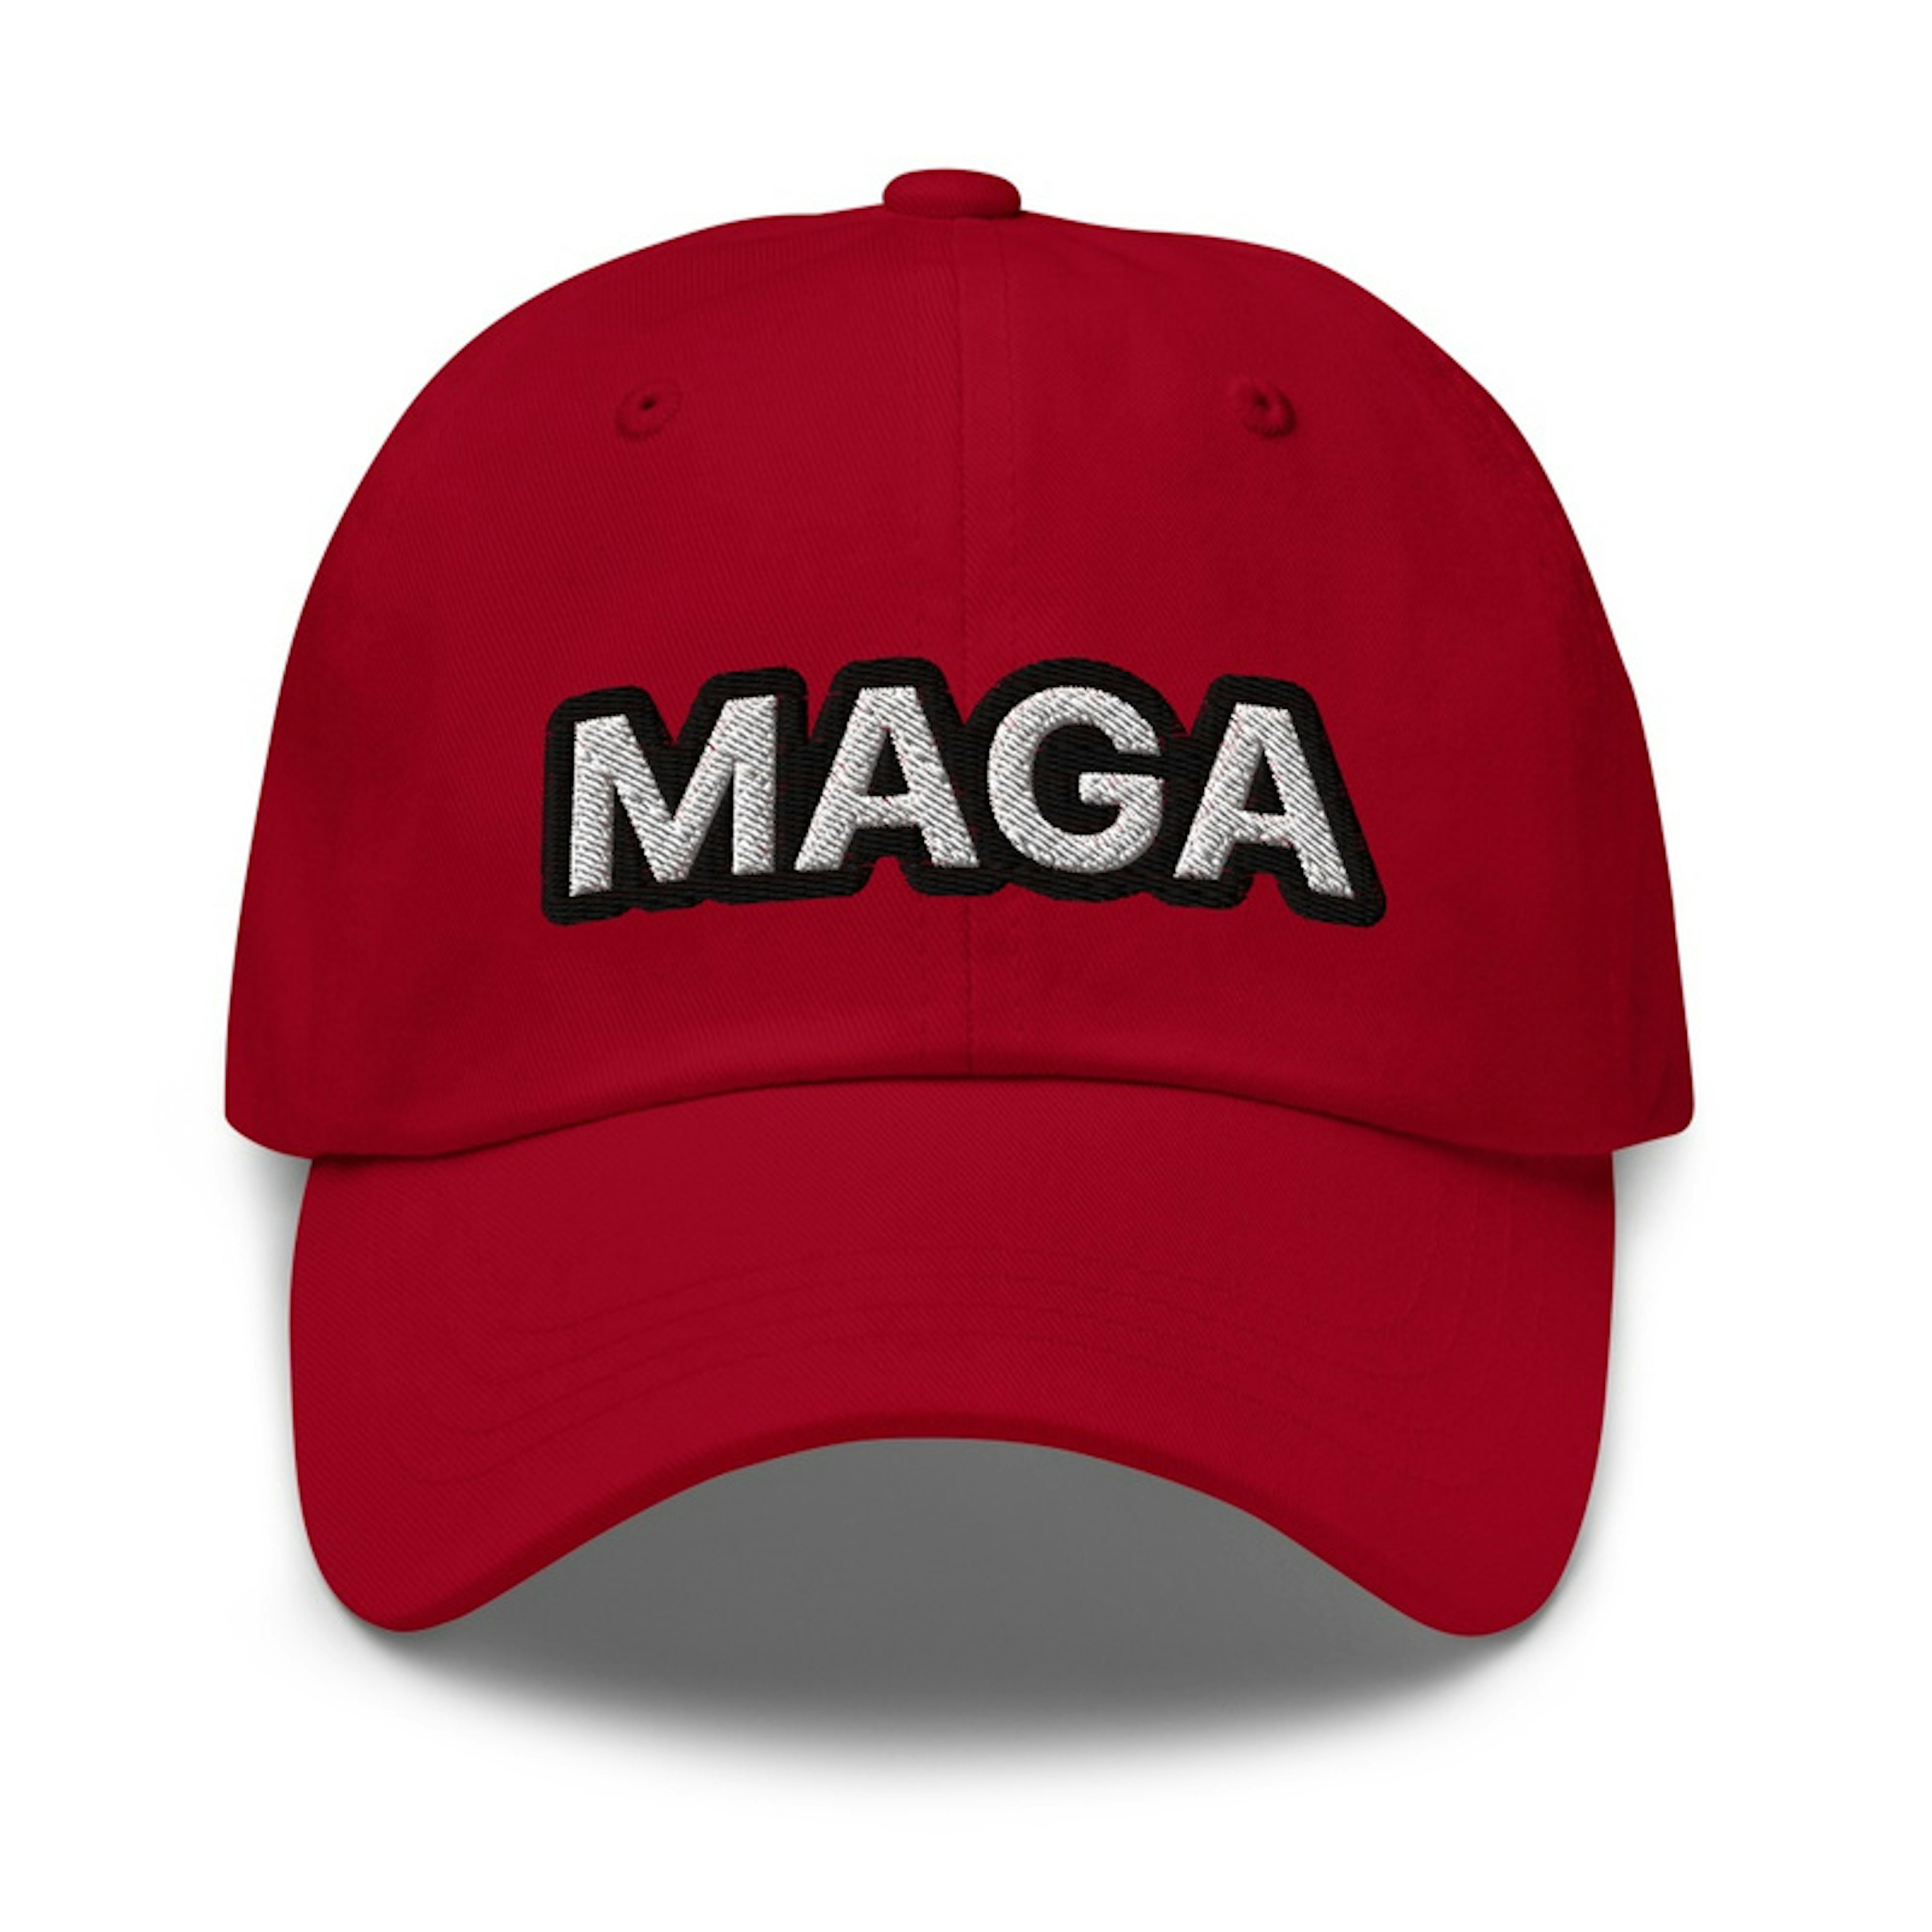 MAGA style cap